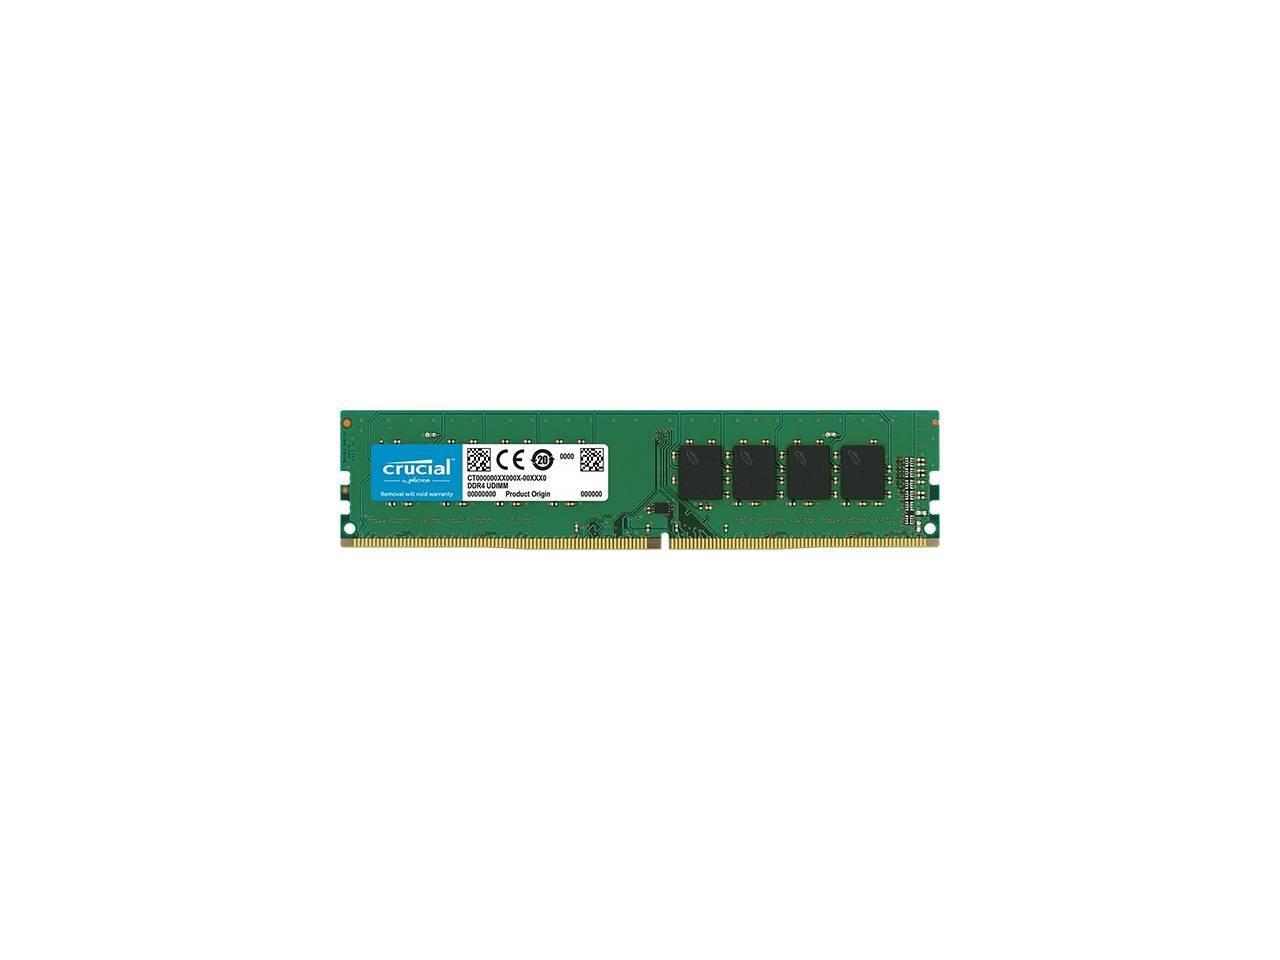 Crucial Memory CT16G4XFD8266 16GB DDR4 2666 ECC VLP Retail 